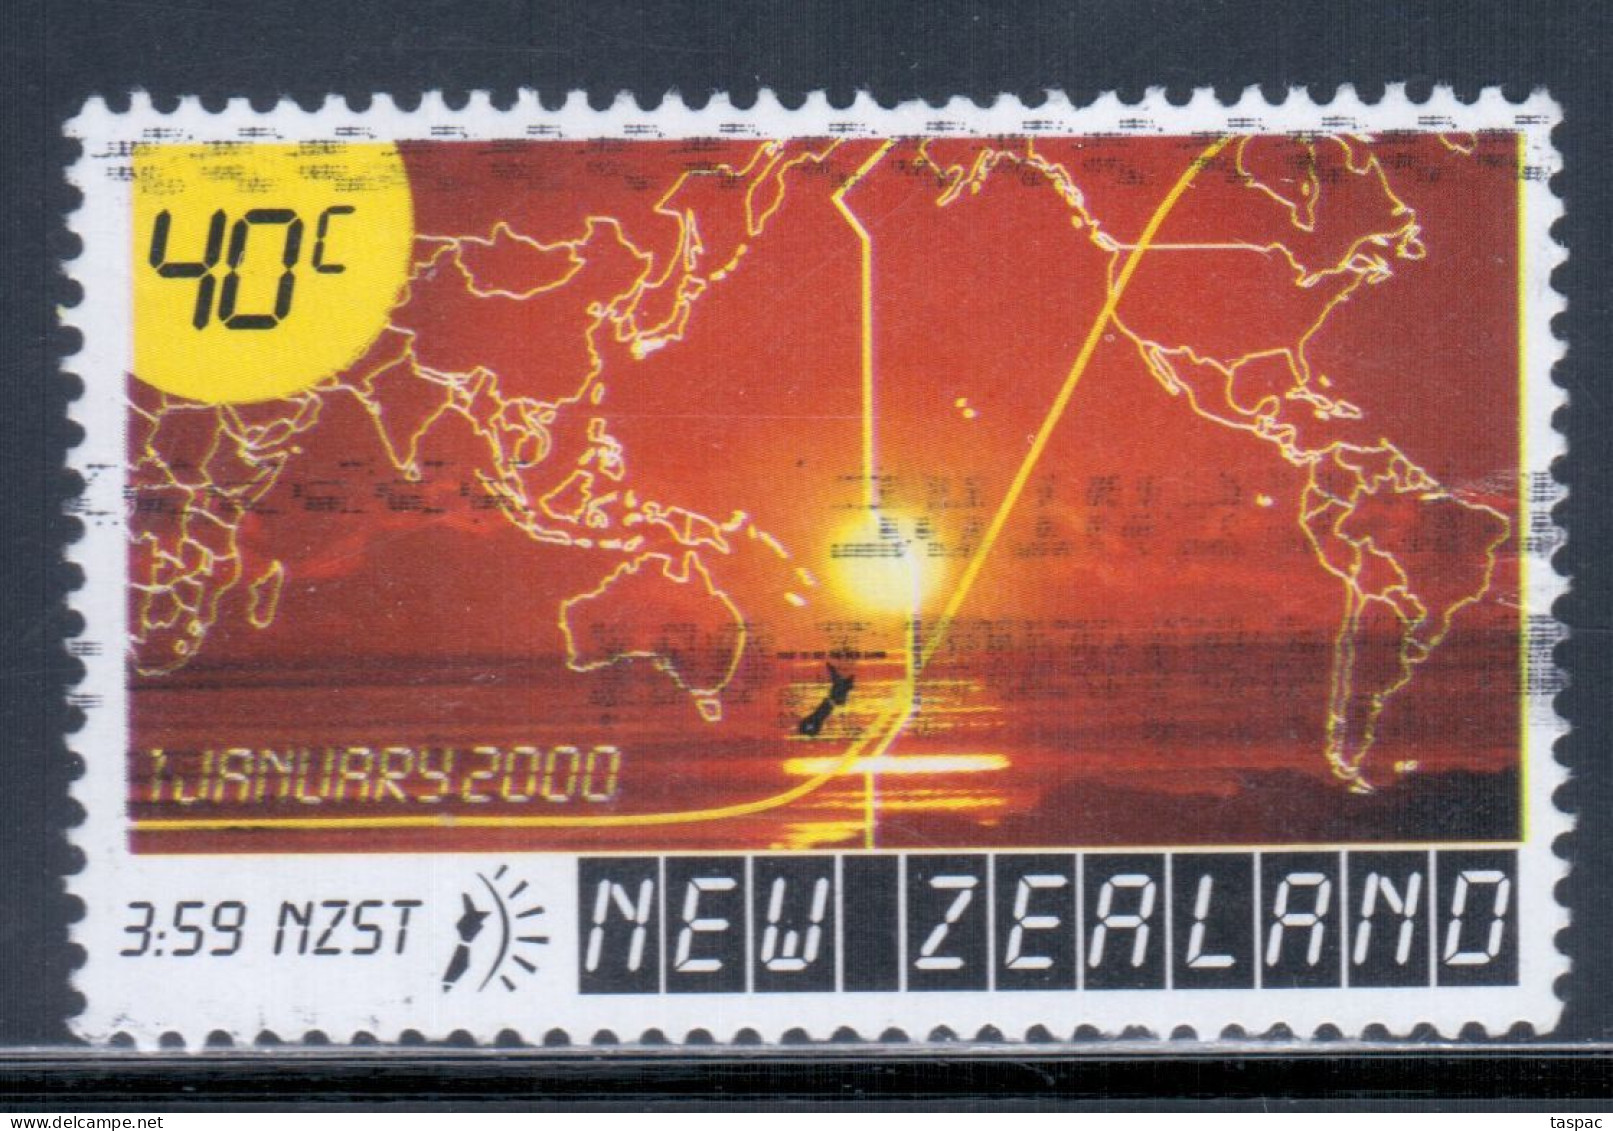 New Zealand 2000 Mi# 1813 Used - First Sunrise Of The New Millennium / Space - Océanie